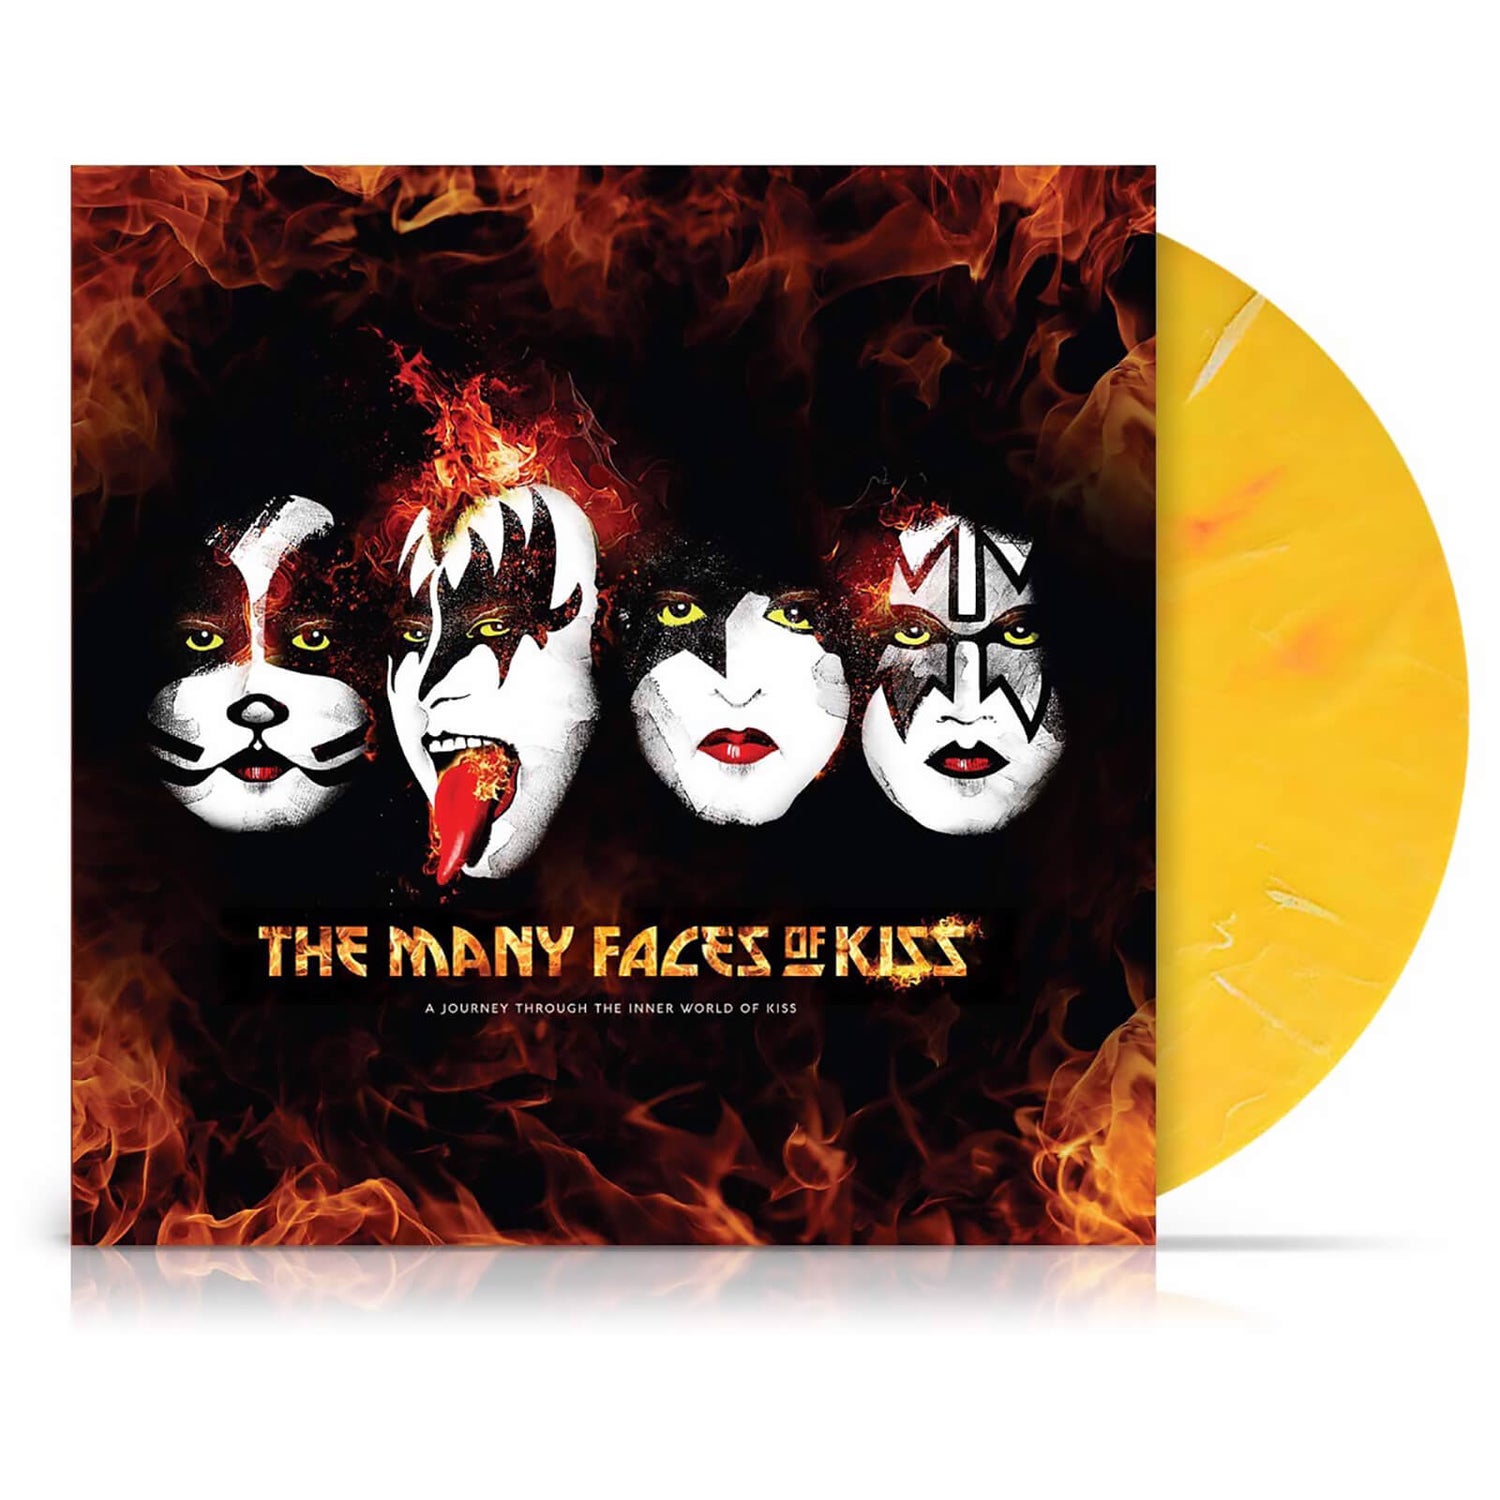 The Many Faces Of Kiss (Limitierte Ausgabe, Vinyl im gelben Splatter-Design)